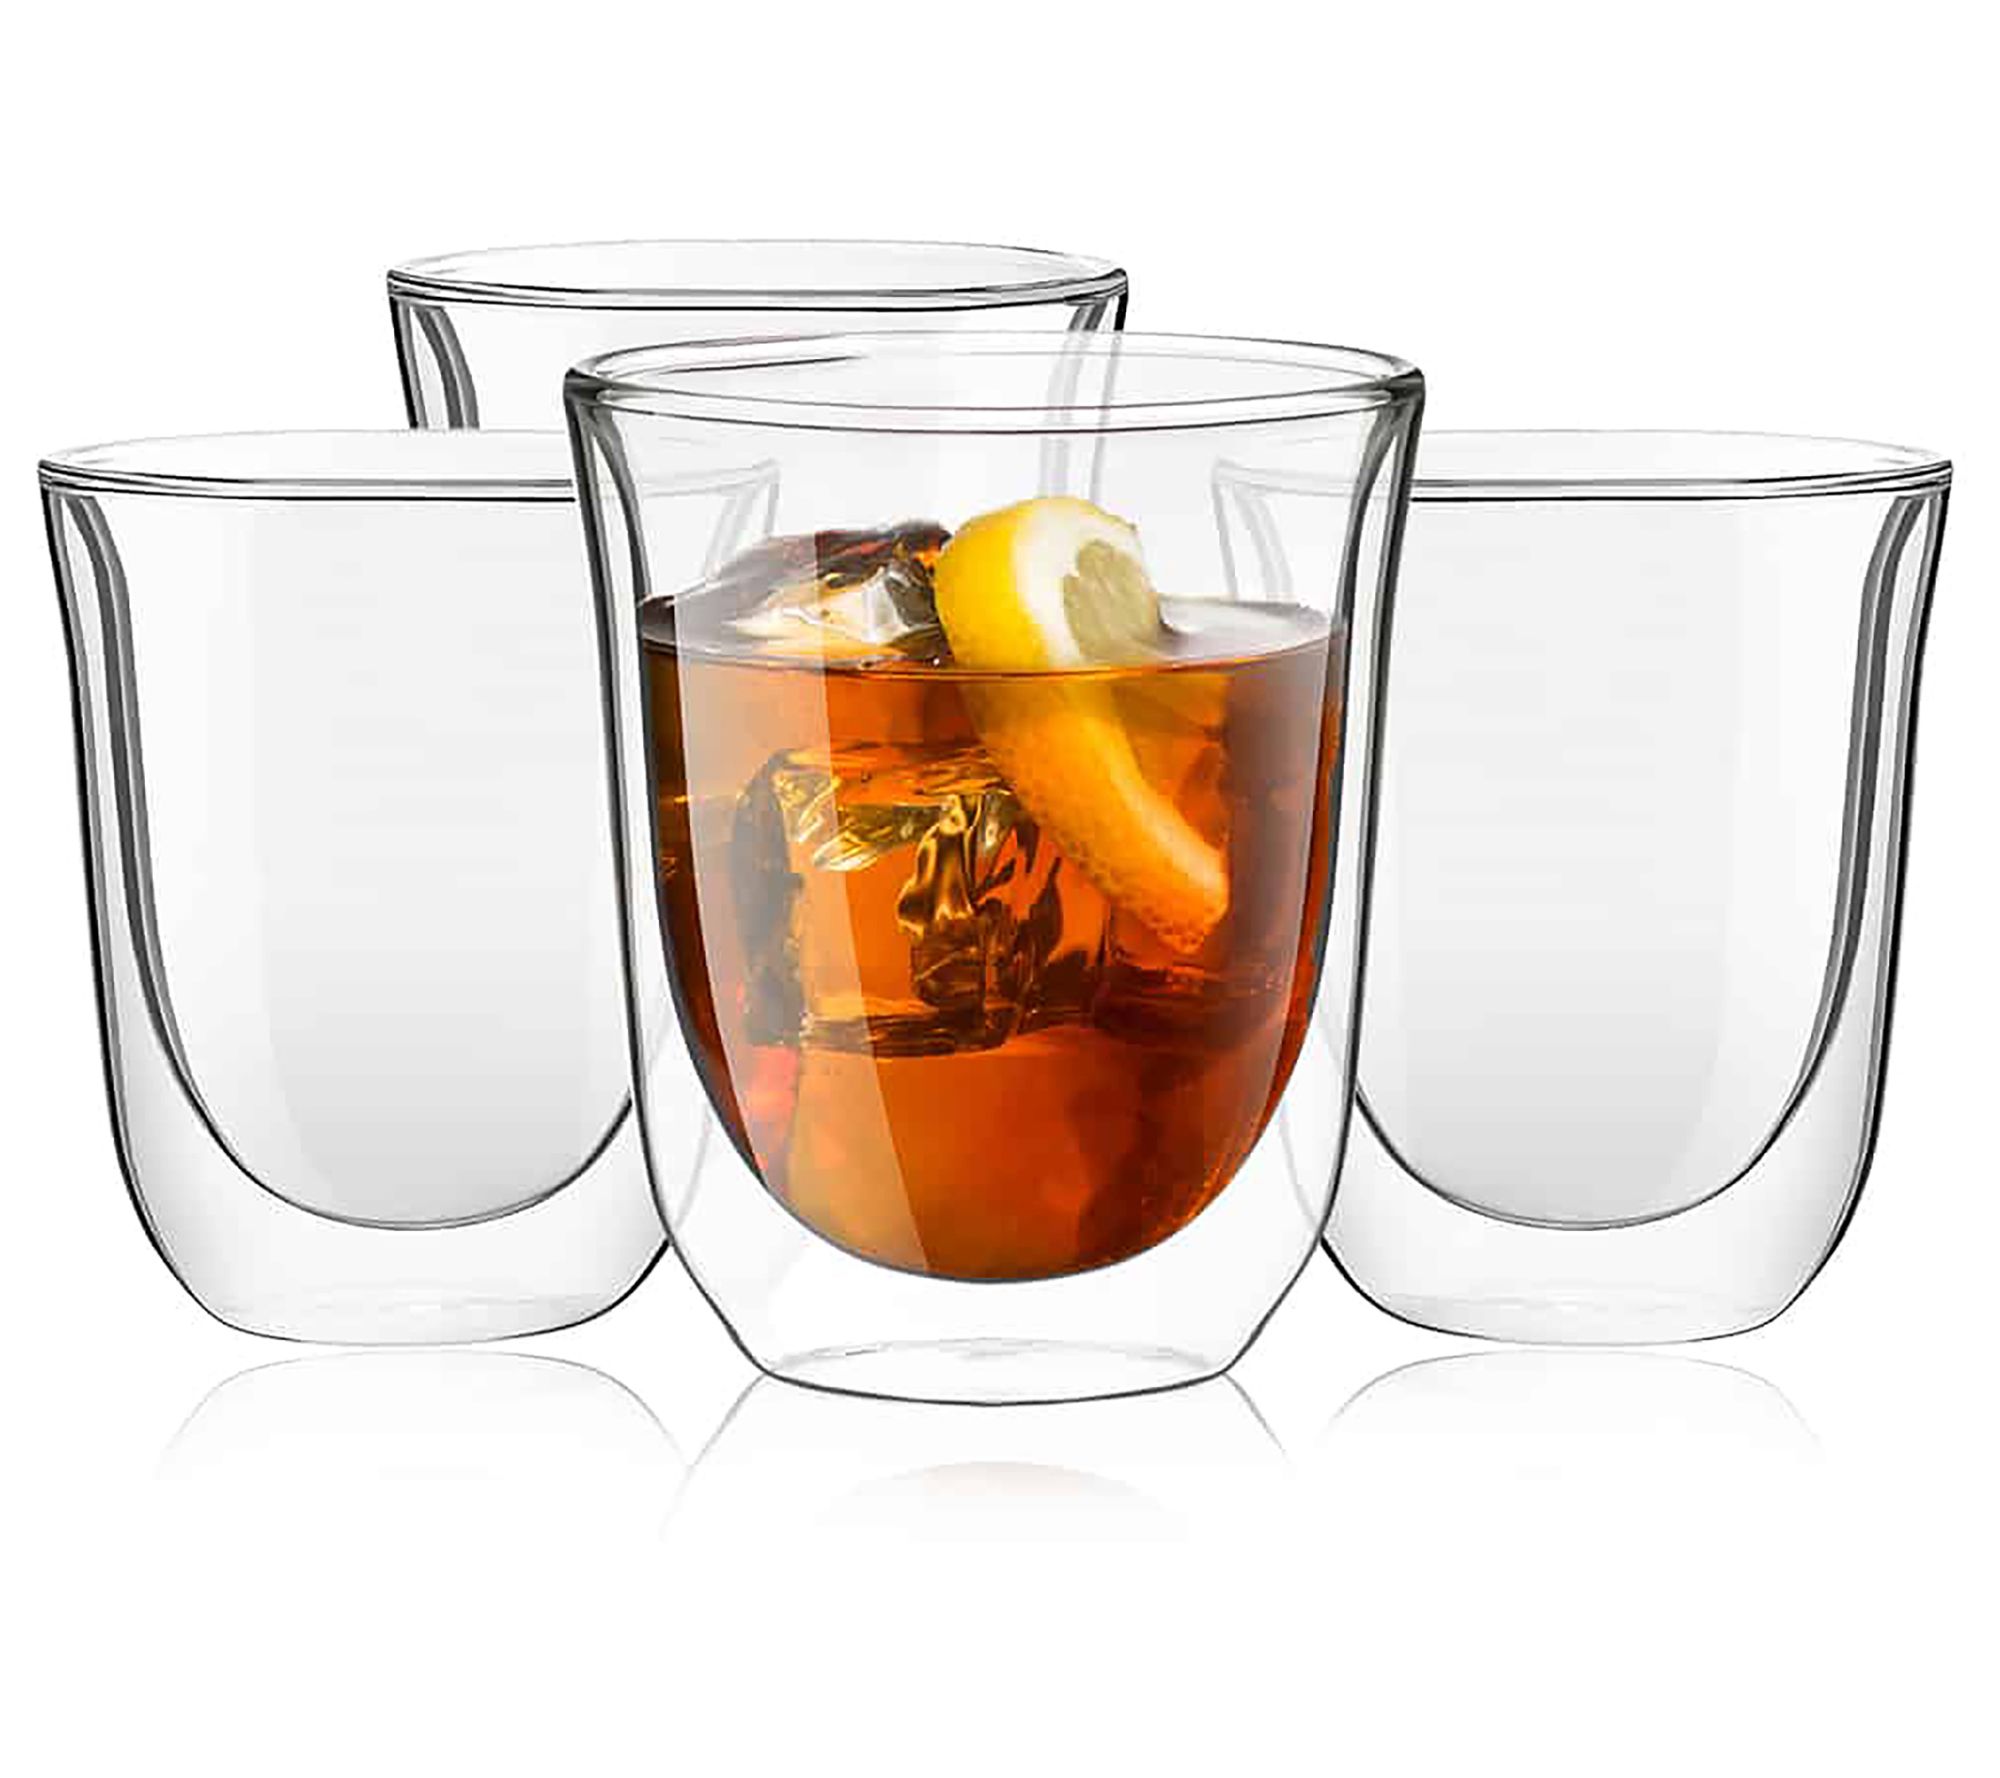 Aquach Double Wall Glass Coffee Mug 12 oz, Large Clear Glass Cup with  Handle Set of 2, Insulated Tea…See more Aquach Double Wall Glass Coffee Mug  12